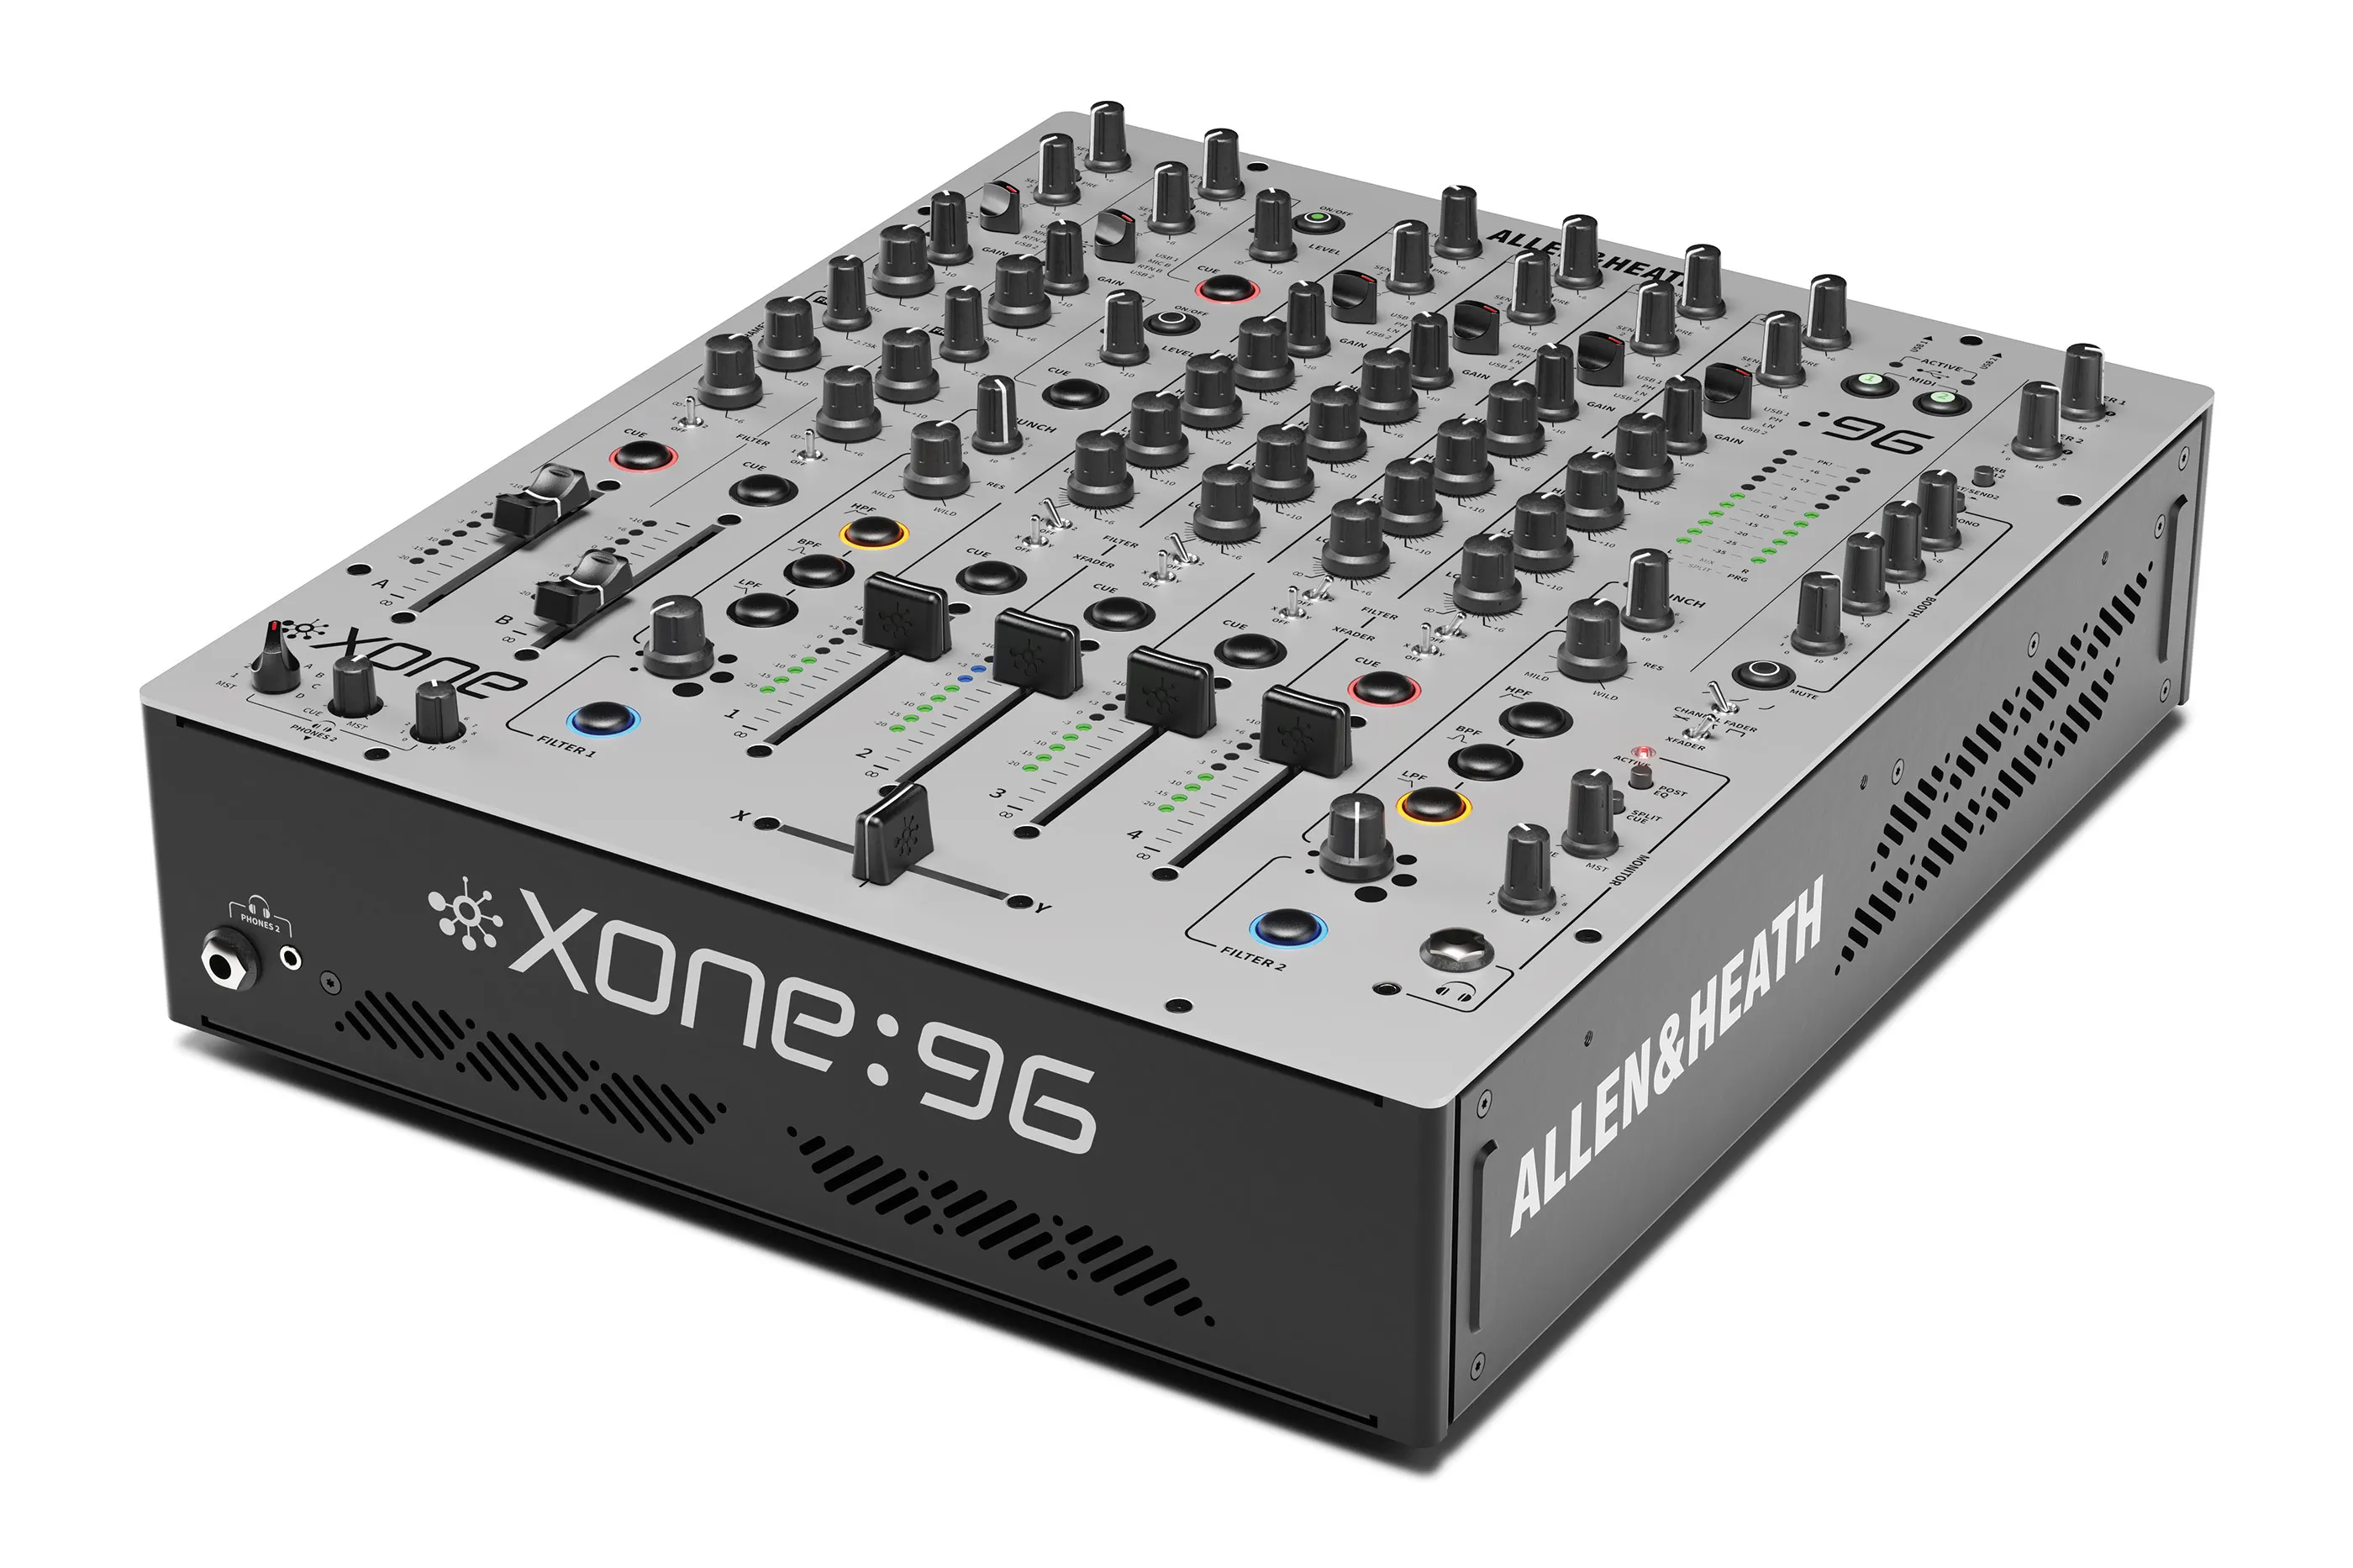 

HIGH QUALITY ON Allen & Heath Xone96 Analogue DJ Mixer with Audio Interface